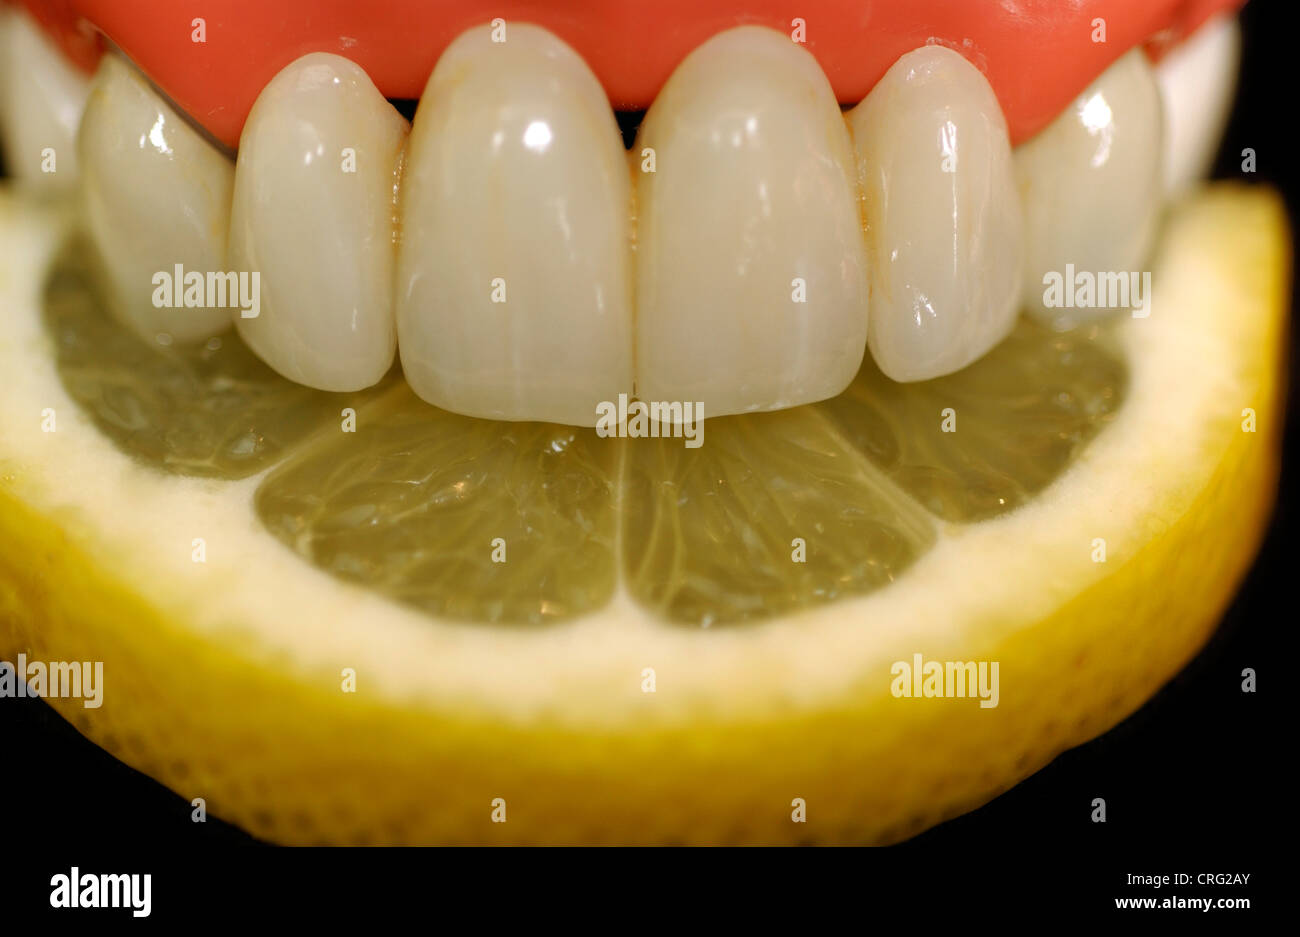 A set of dentures biting down on a slice of lemon. Stock Photo